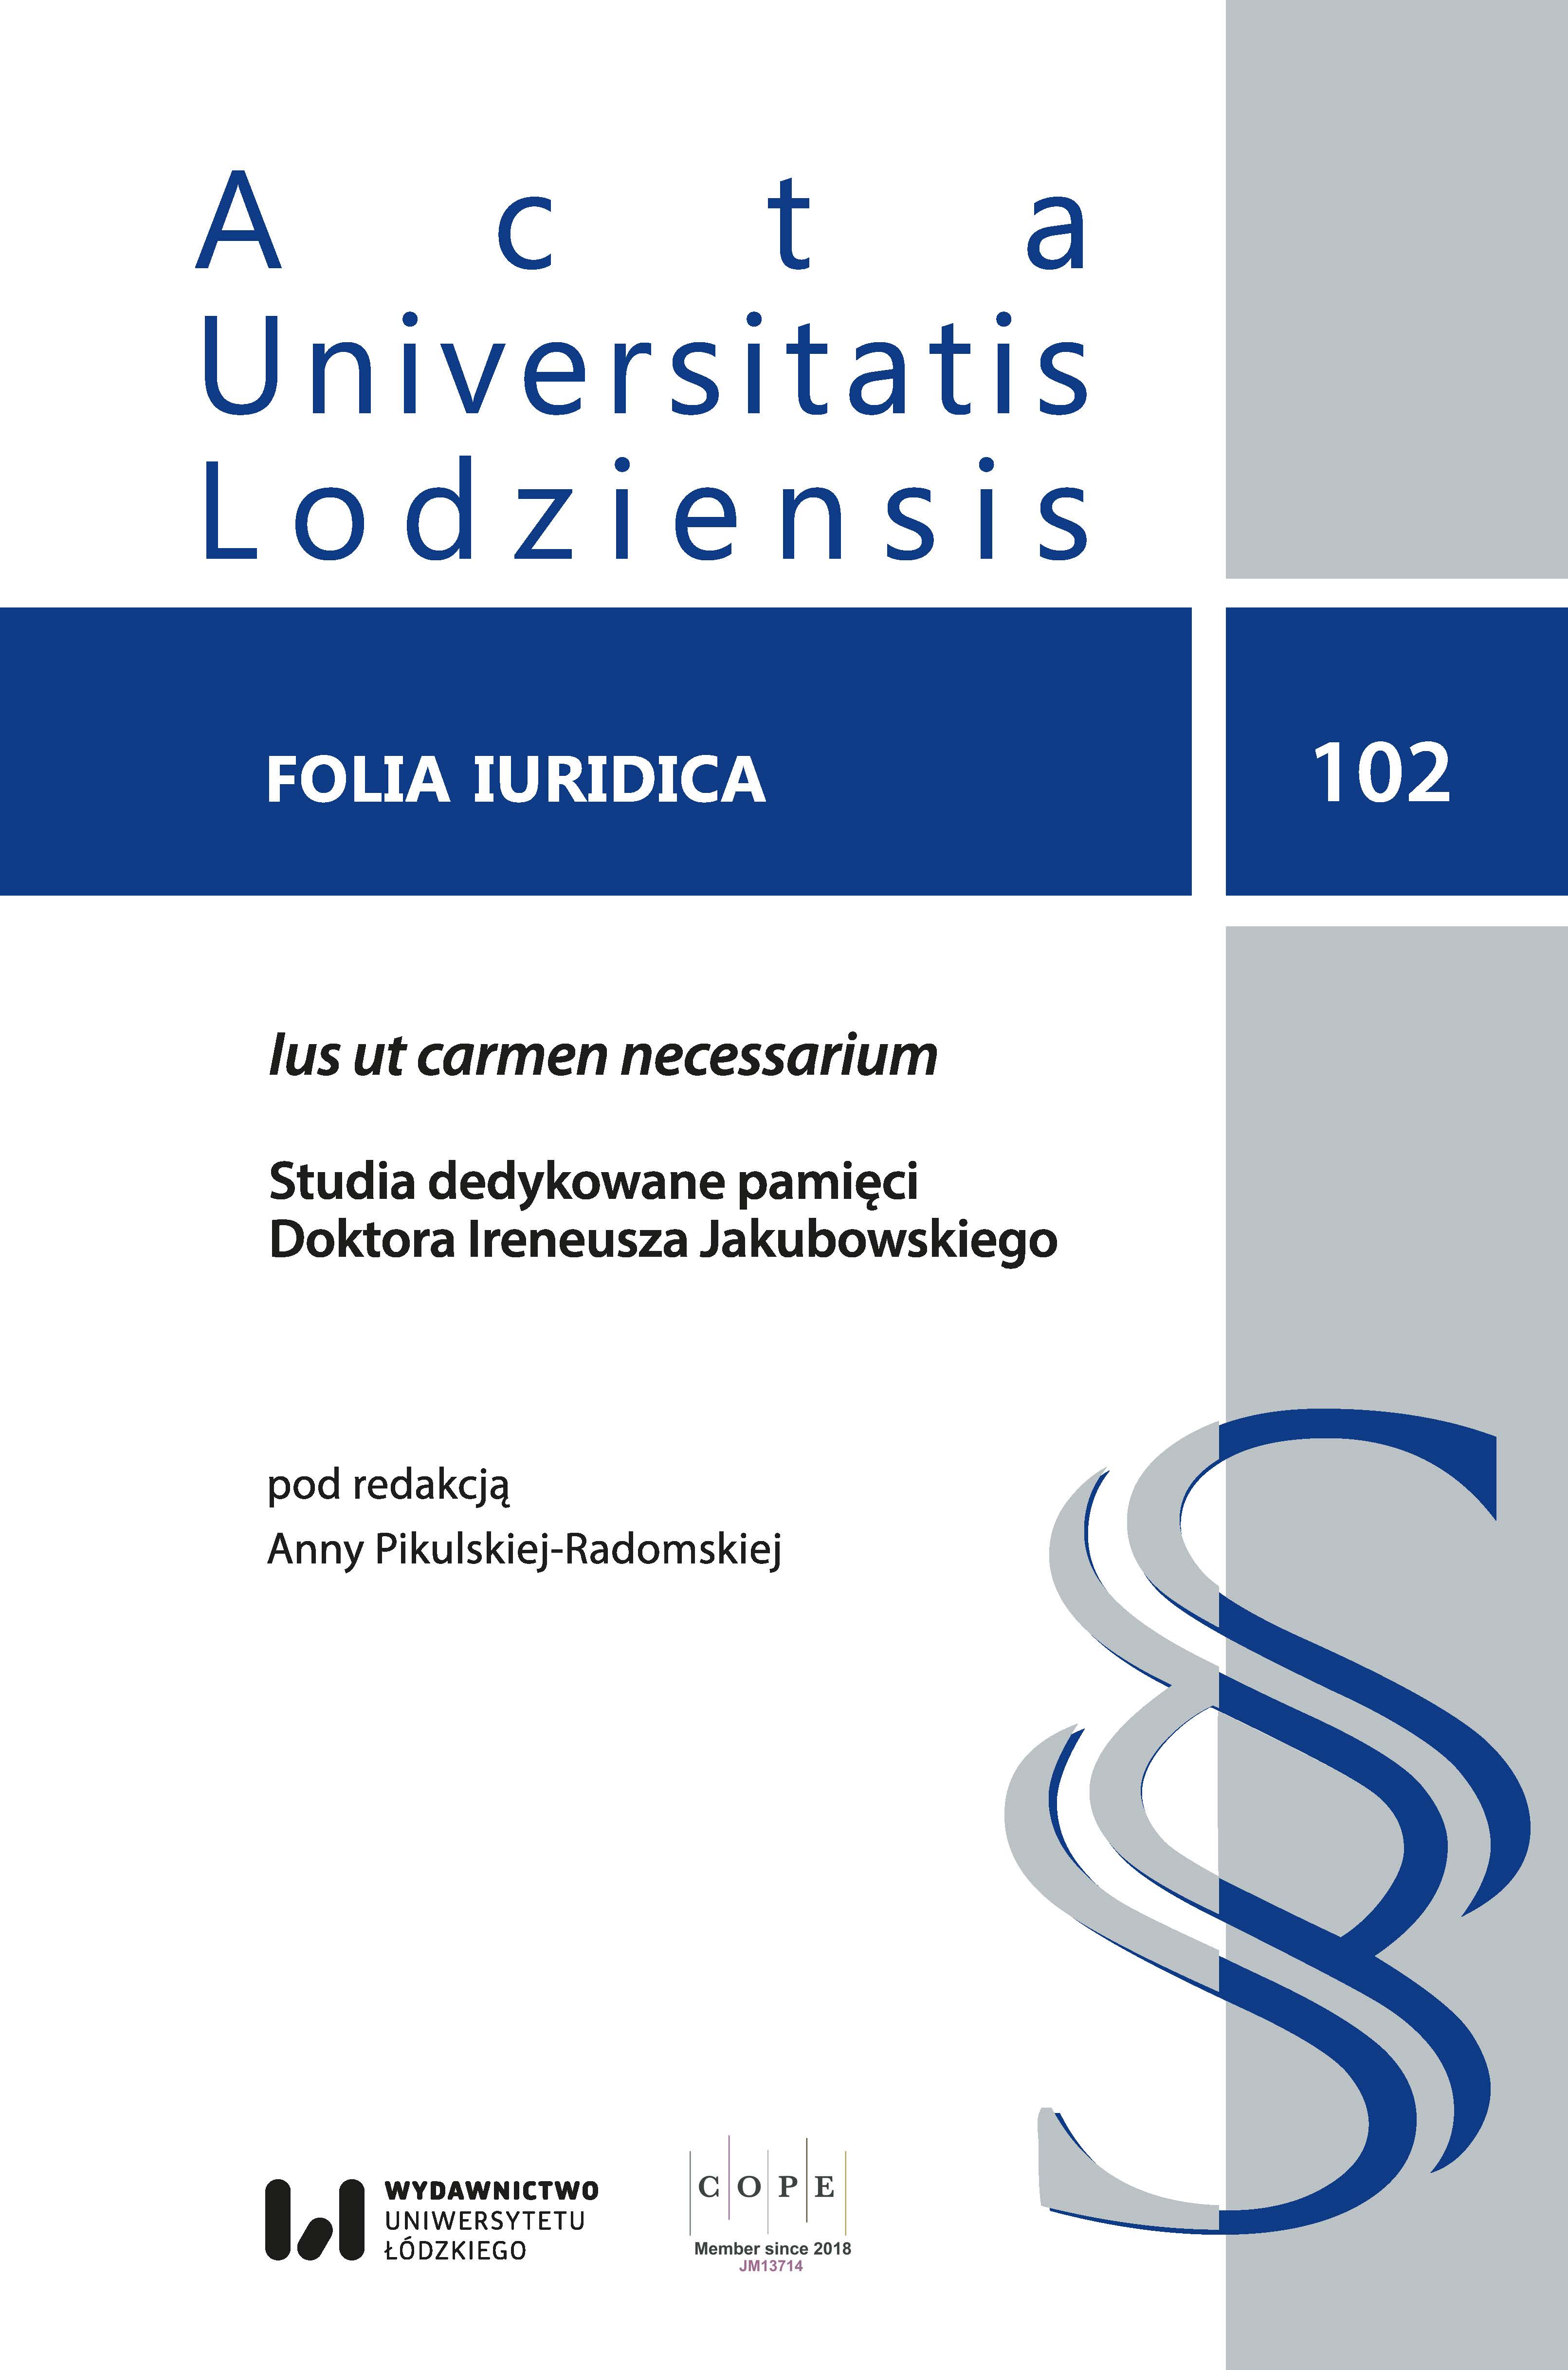 Ubi thesaurus tuus, ibi et cor tuum. Tadeusz Czacki in Ireneusz Jakubowski’s Research Cover Image